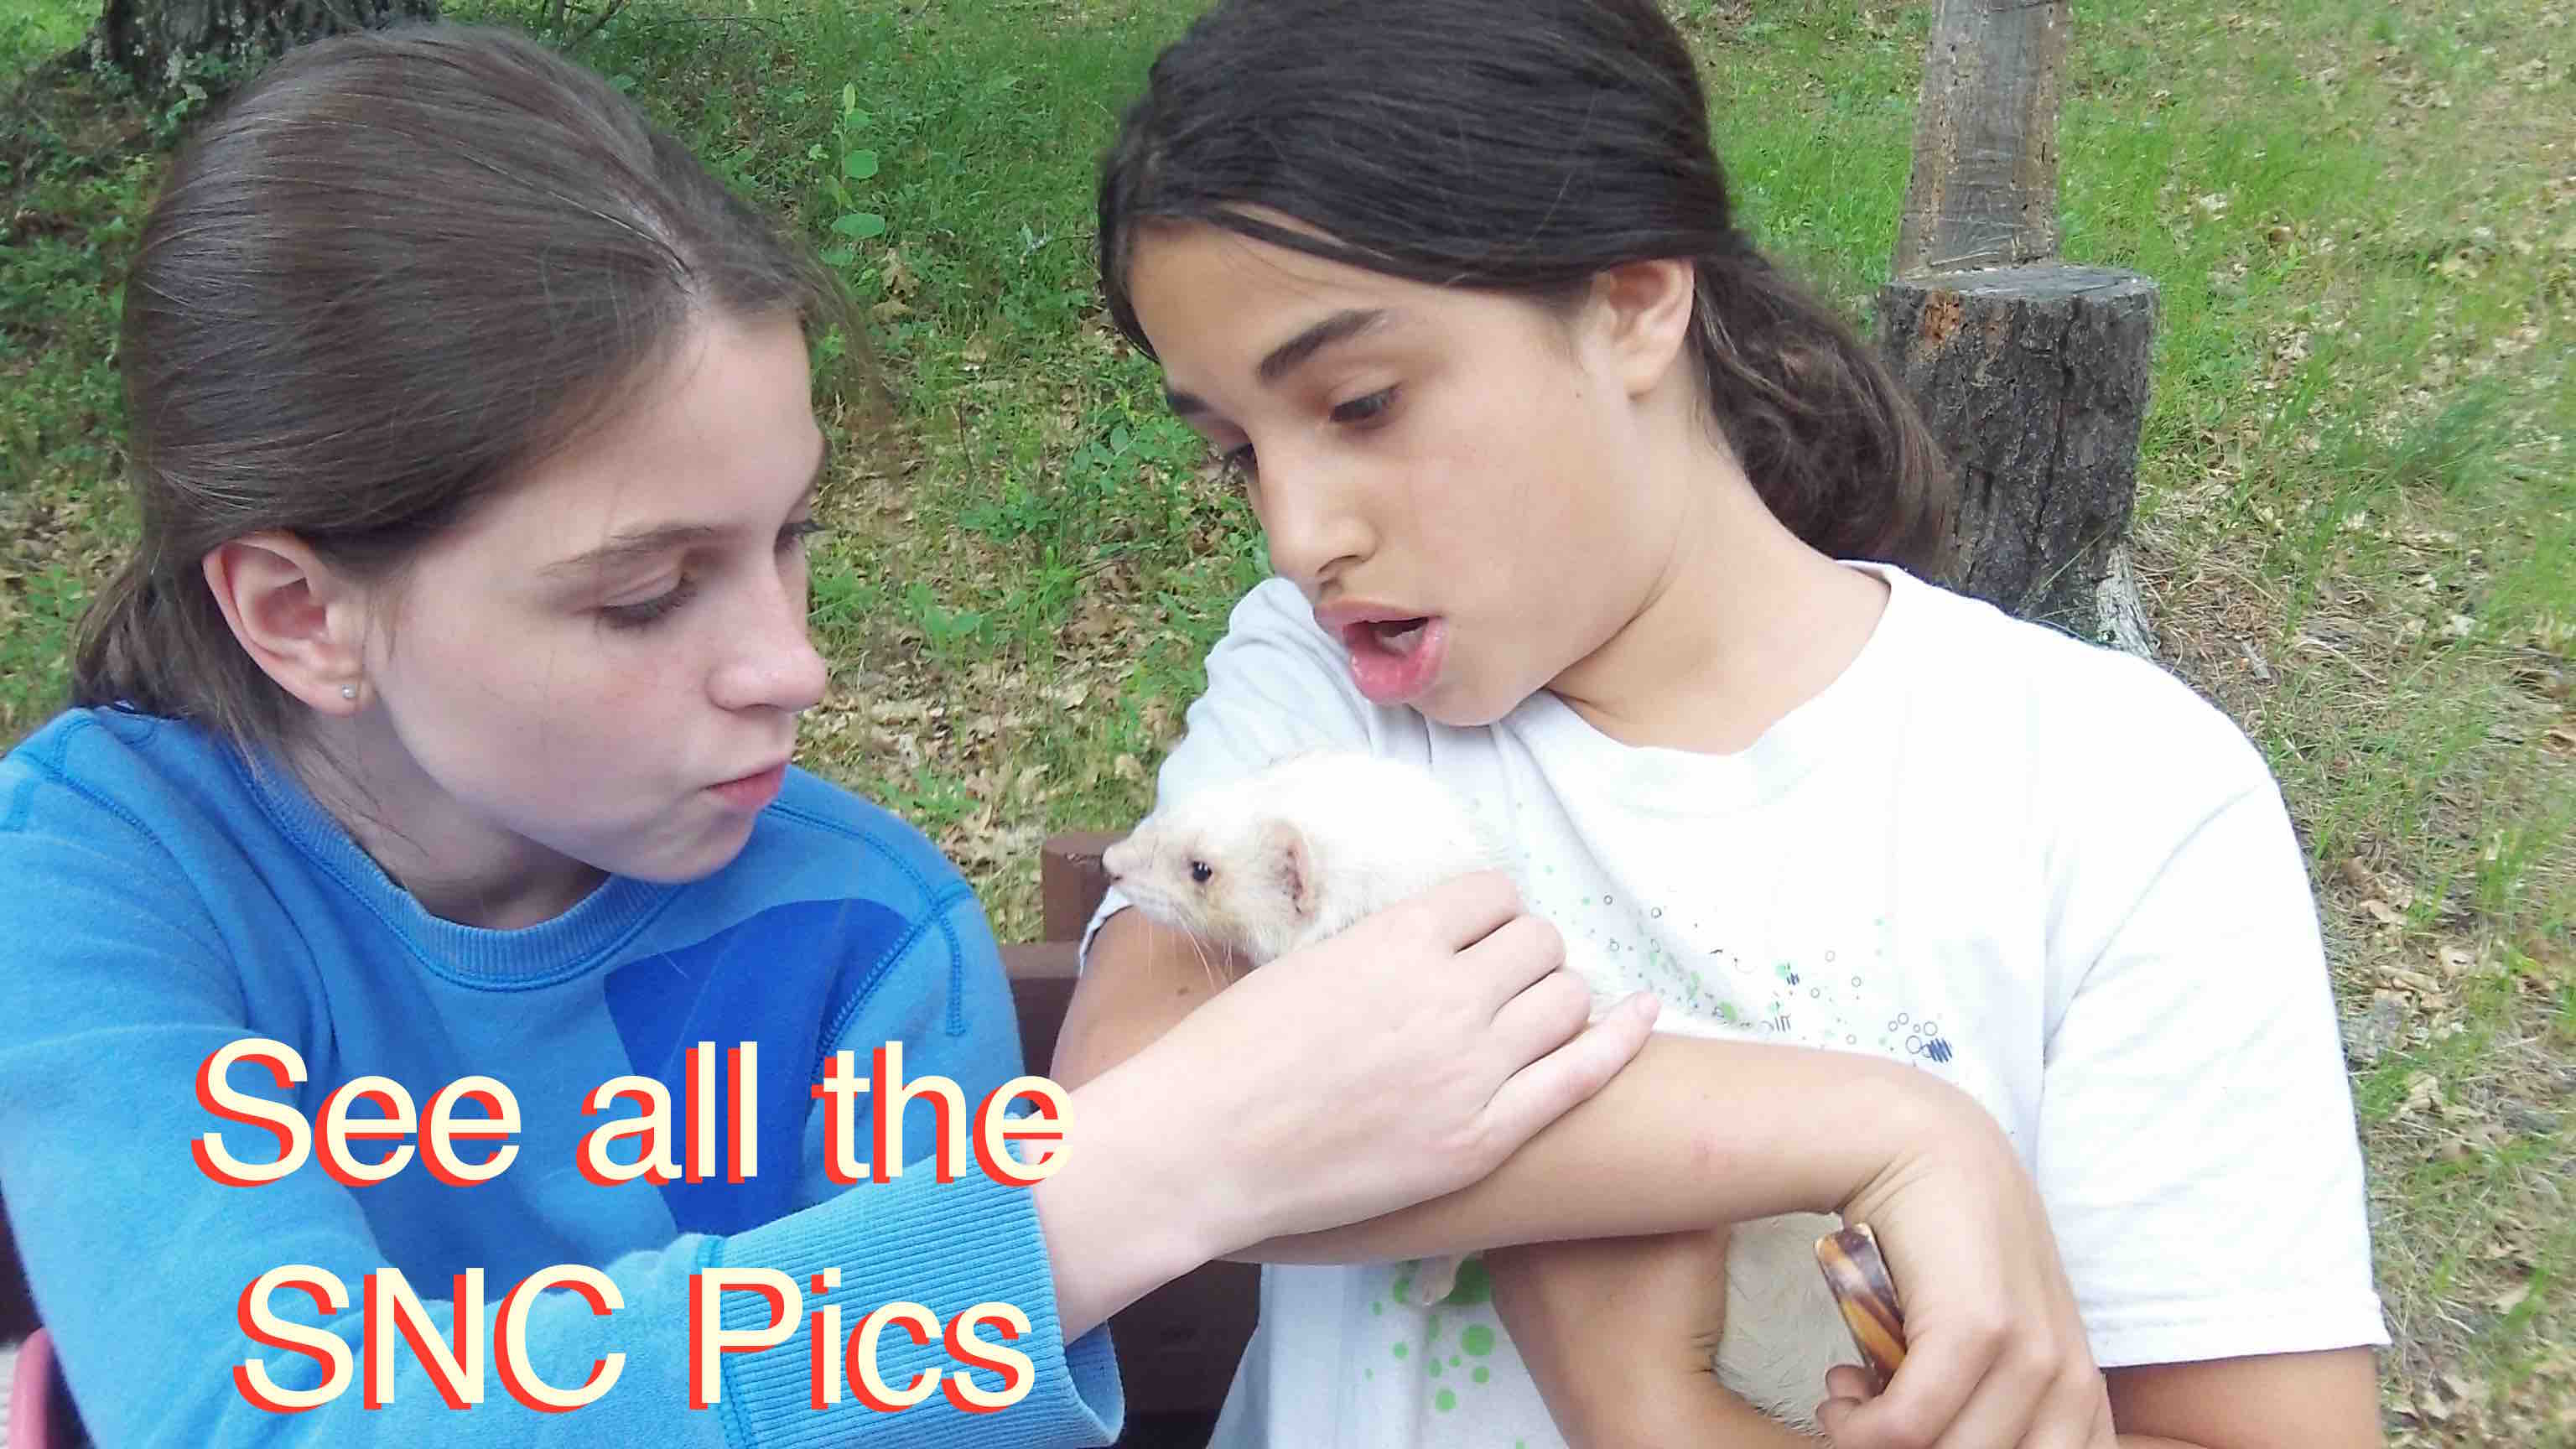 kids_with_animals-jpg.jpg